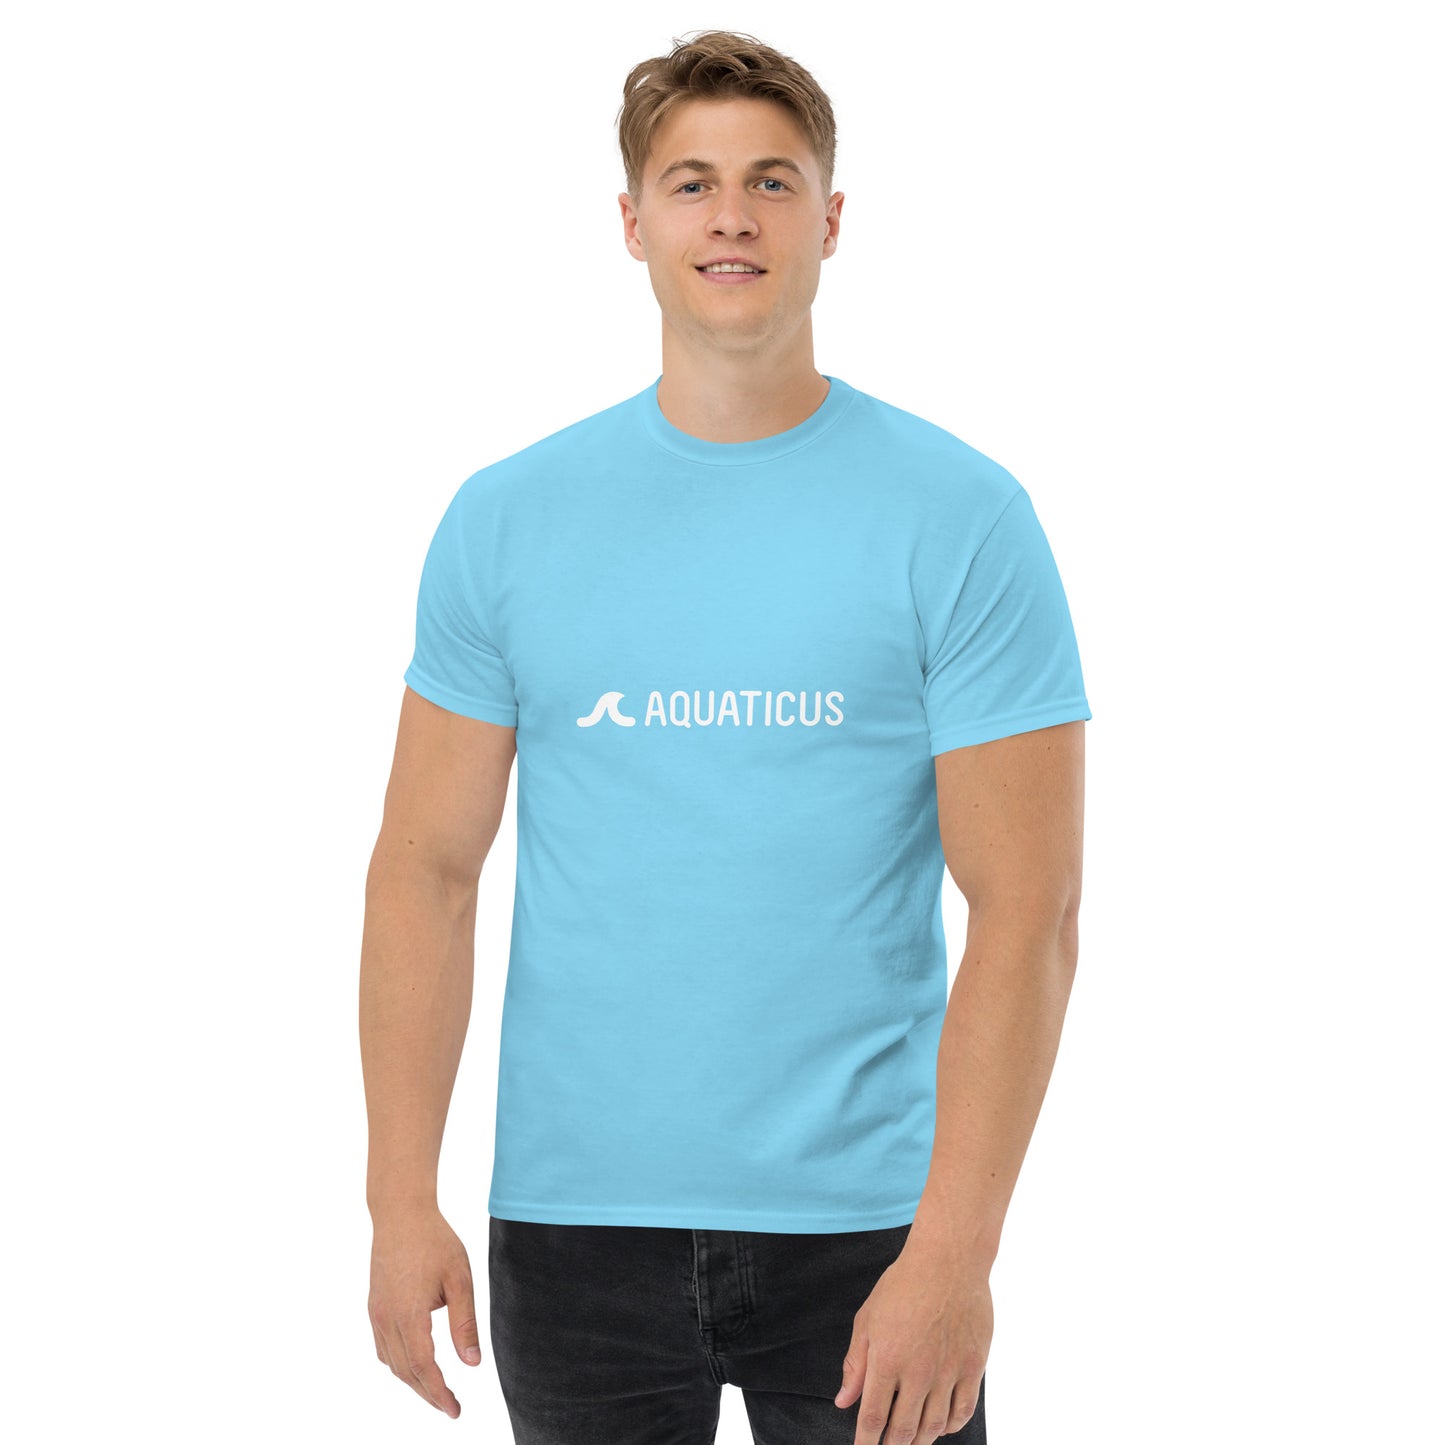 AQUATICUS - Camiseta clássica masculina